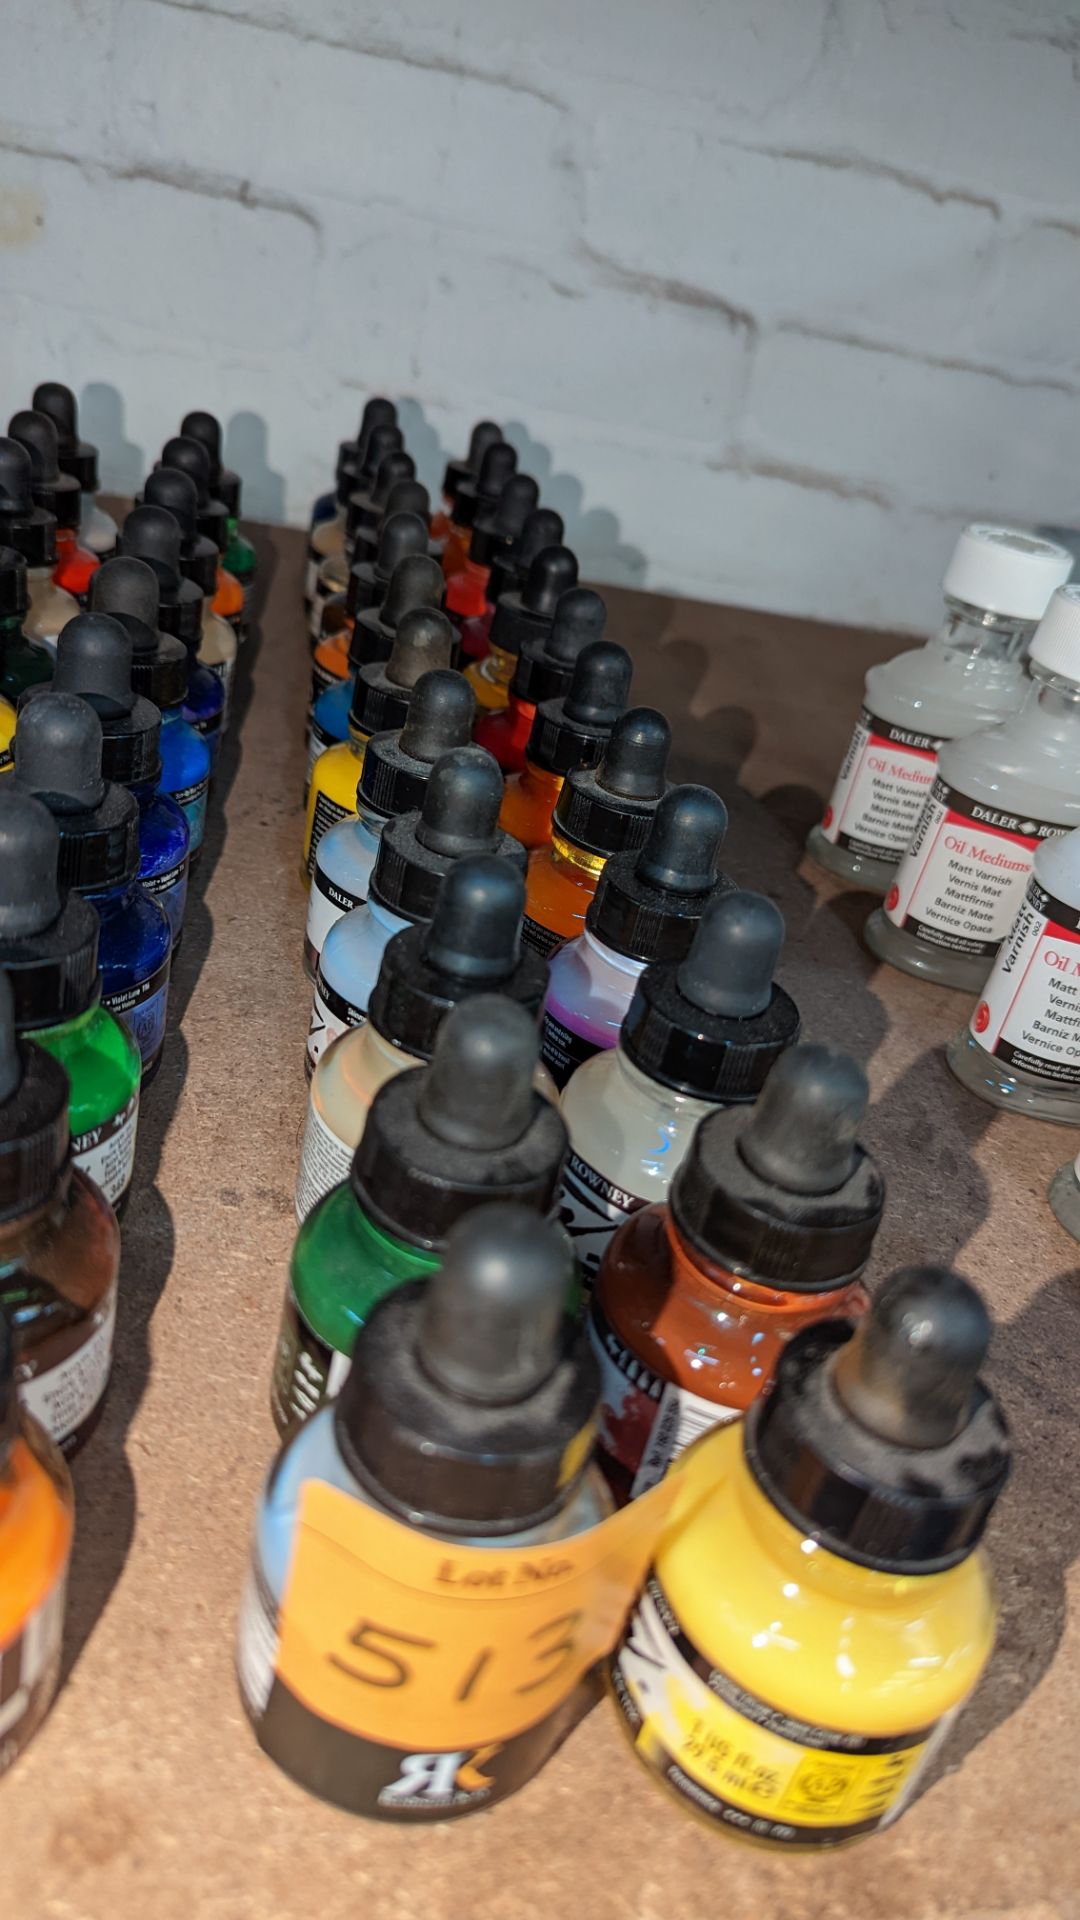 24 off 29.5ml bottles of Daler Rowney acrylic paints & similar